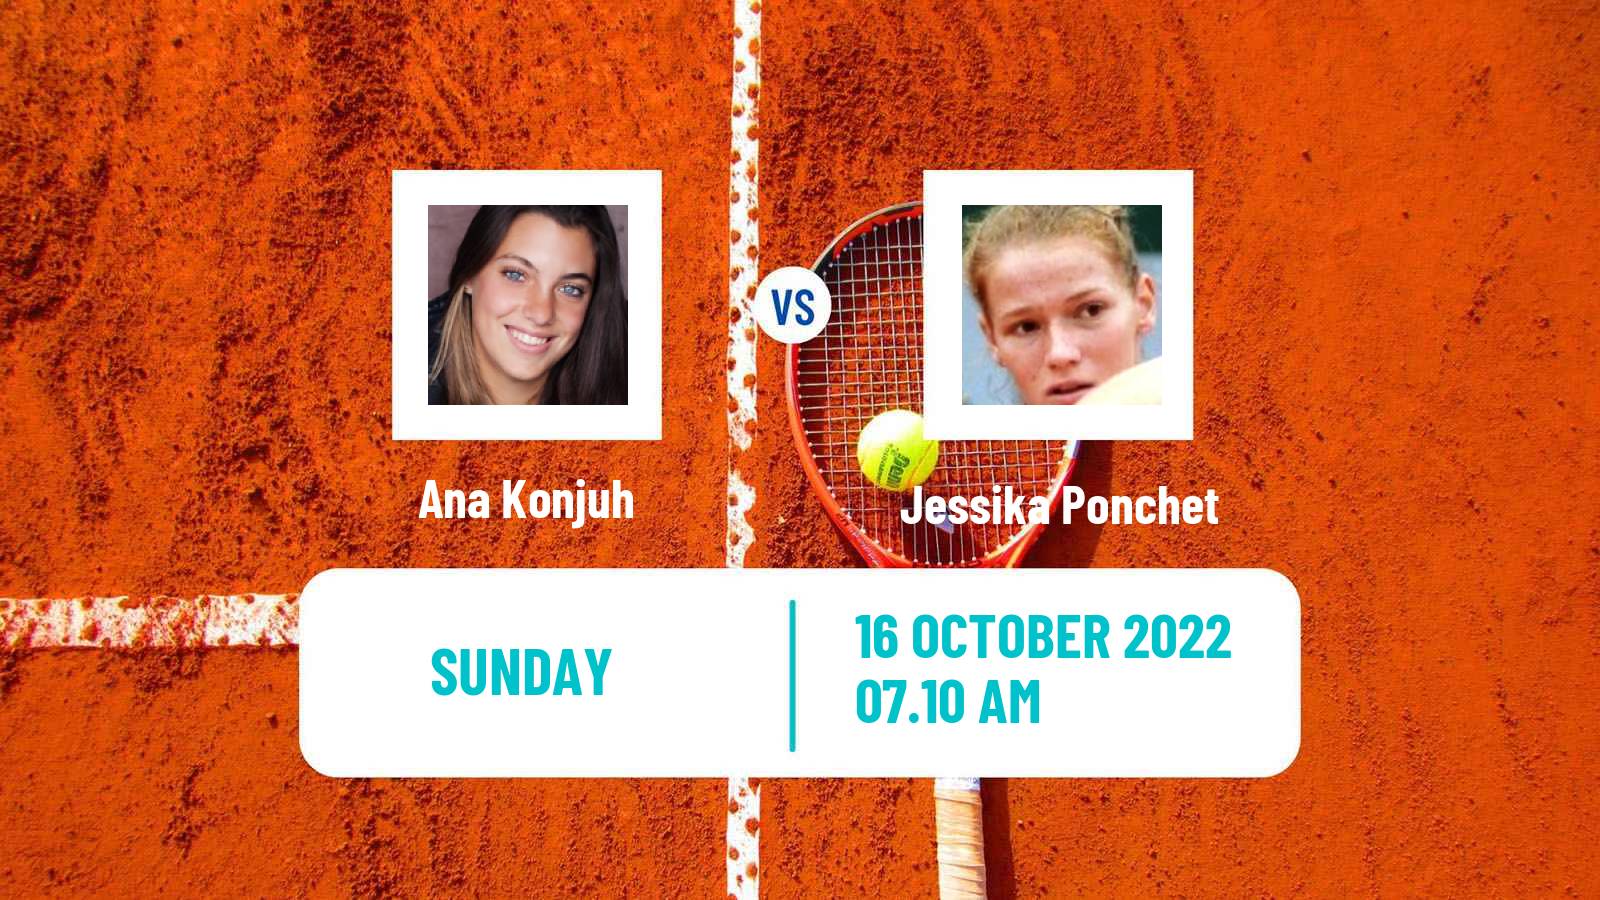 Tennis ATP Challenger Ana Konjuh - Jessika Ponchet